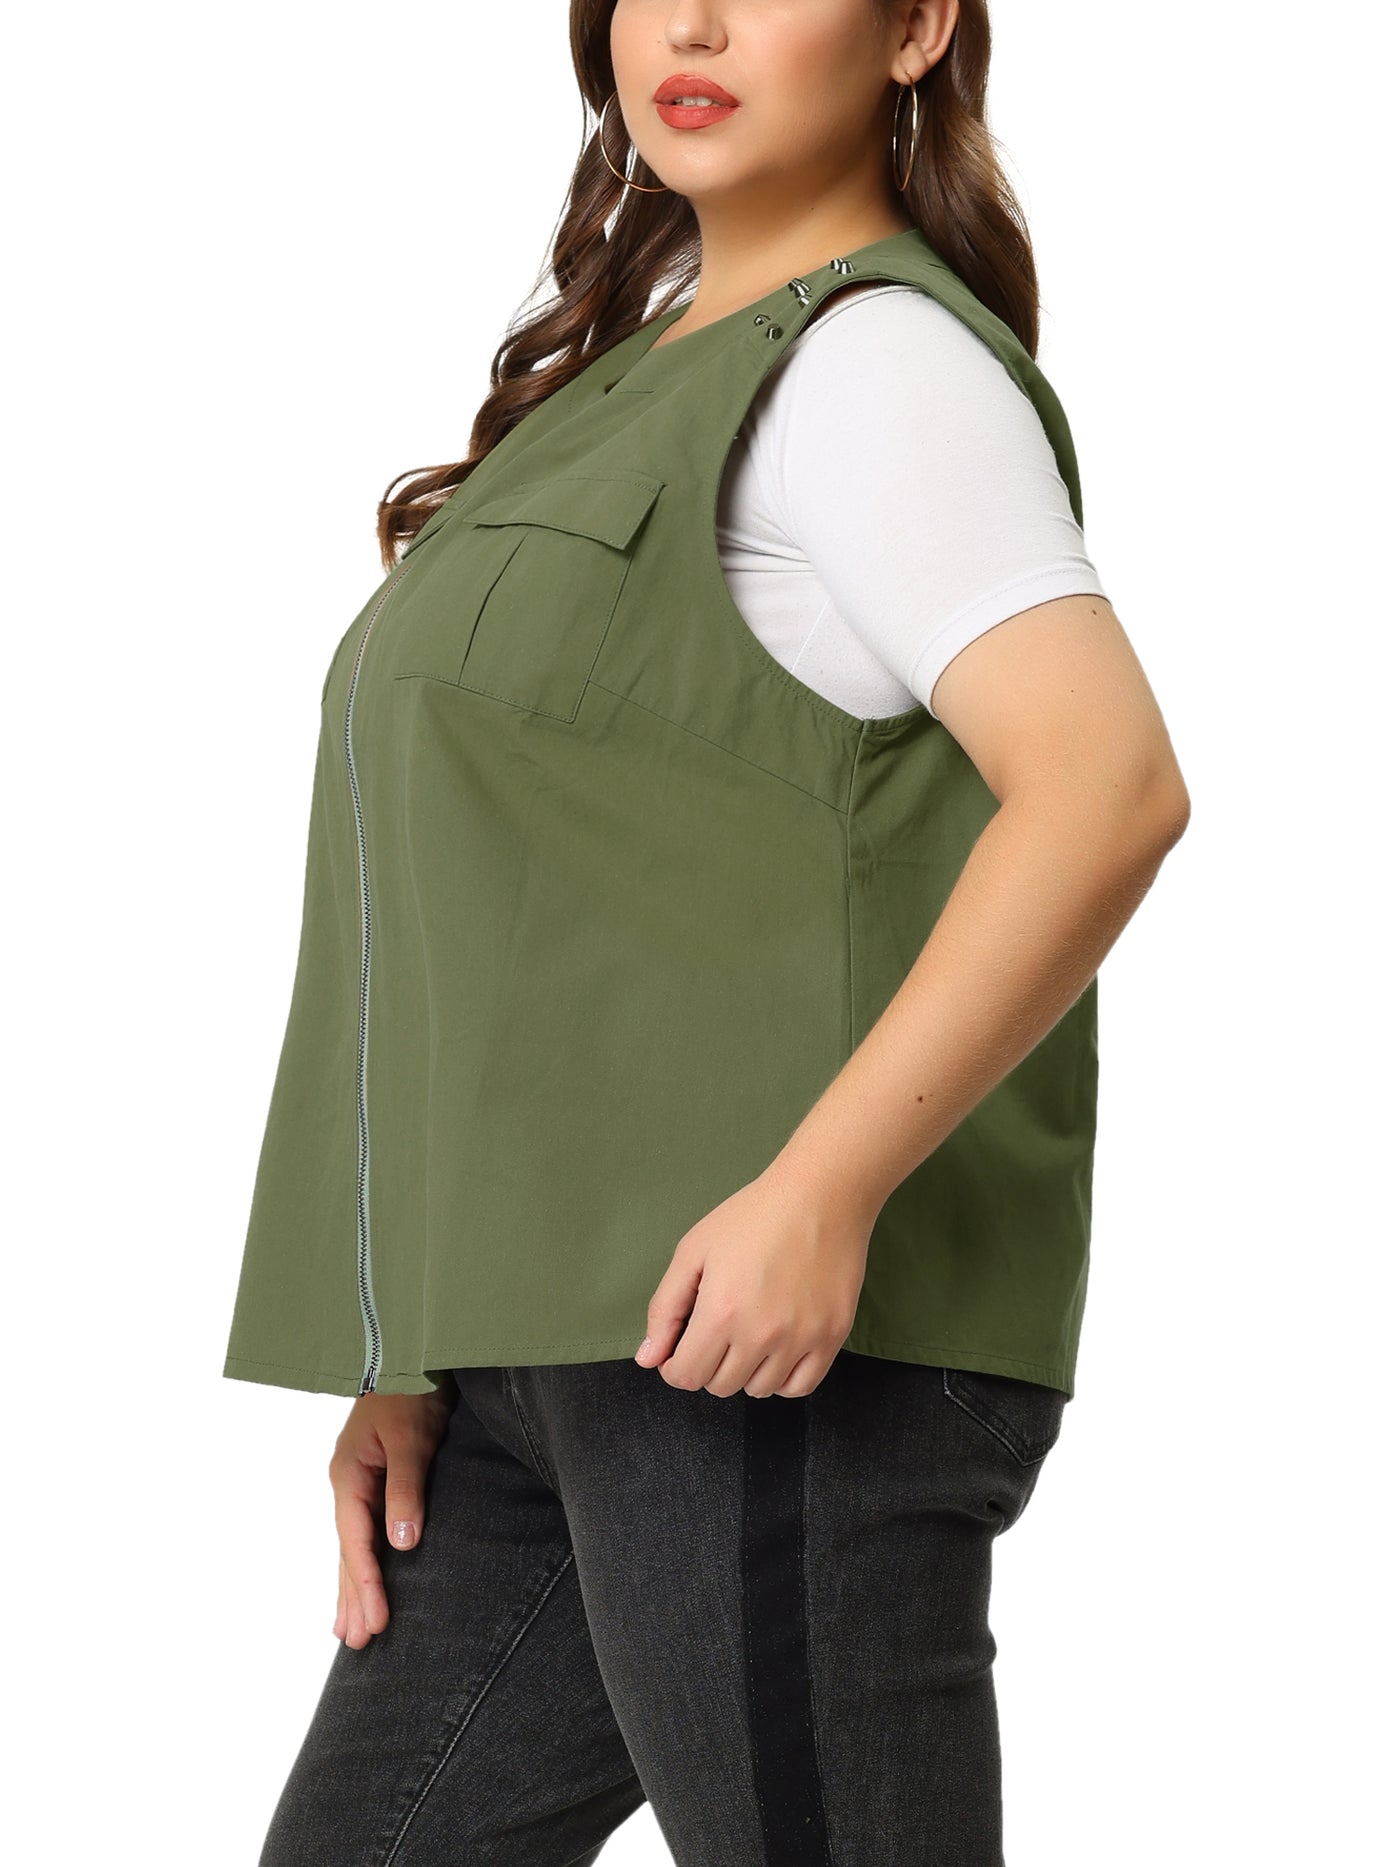 Bublédon Women's Plus Size Anorak Jacket Zip Up Lightweight Sleeveless Utility Vest